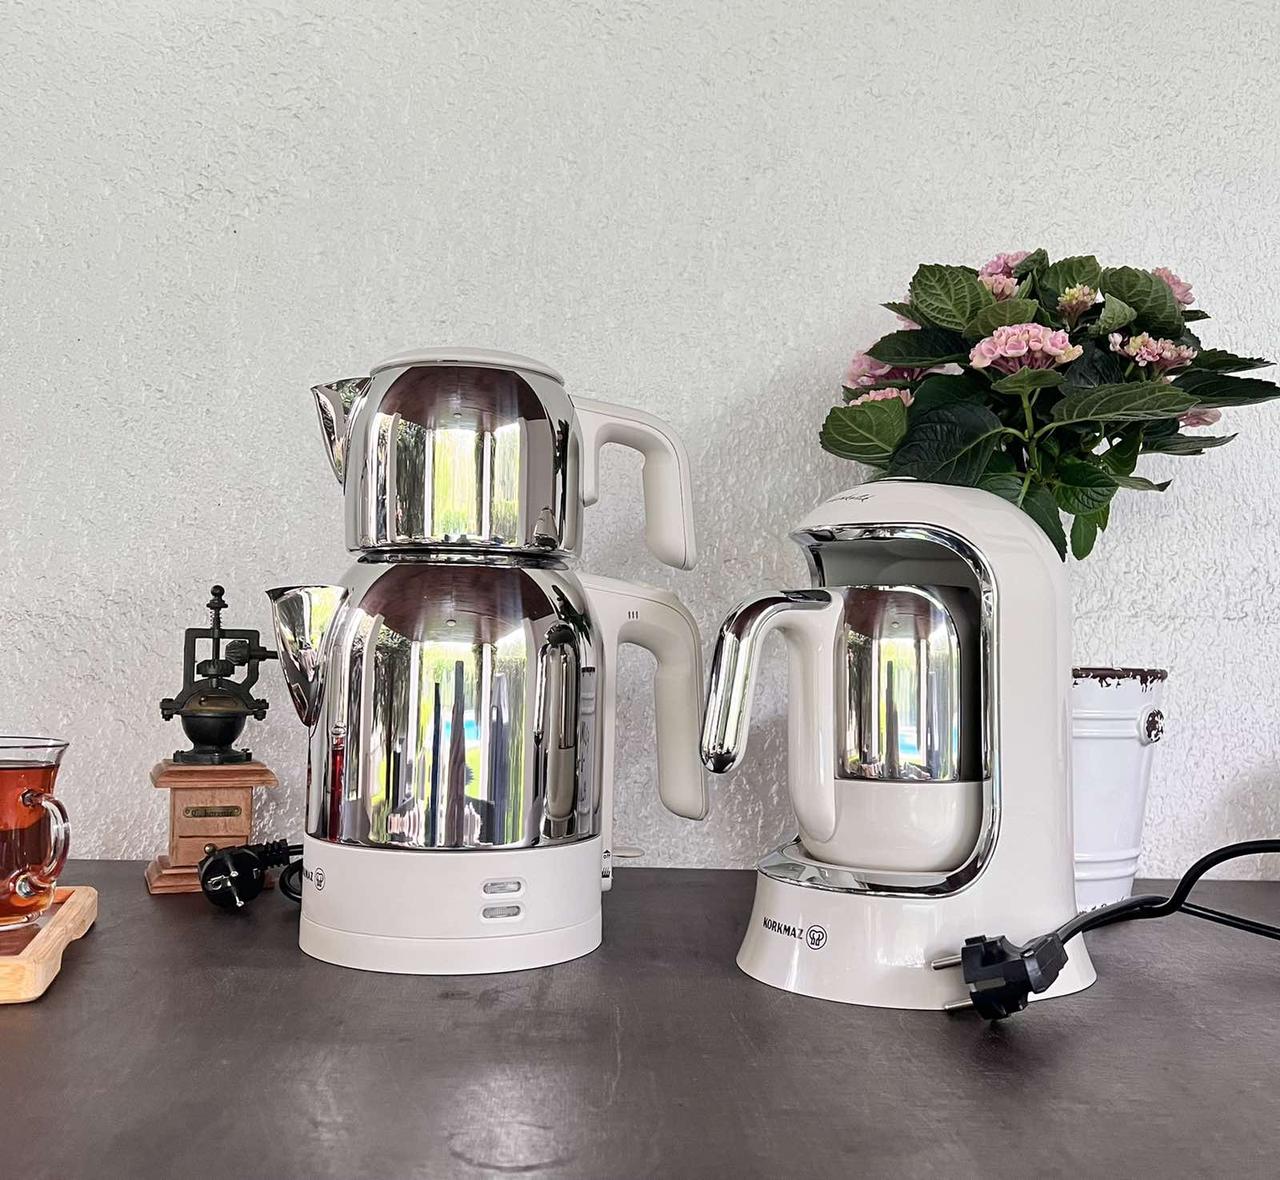 Набір електричний чайник Korkmaz A359-09 Vanilla Teapot — Cream і електрична кавоварка Korkmaz Automatic Grida, фото 1